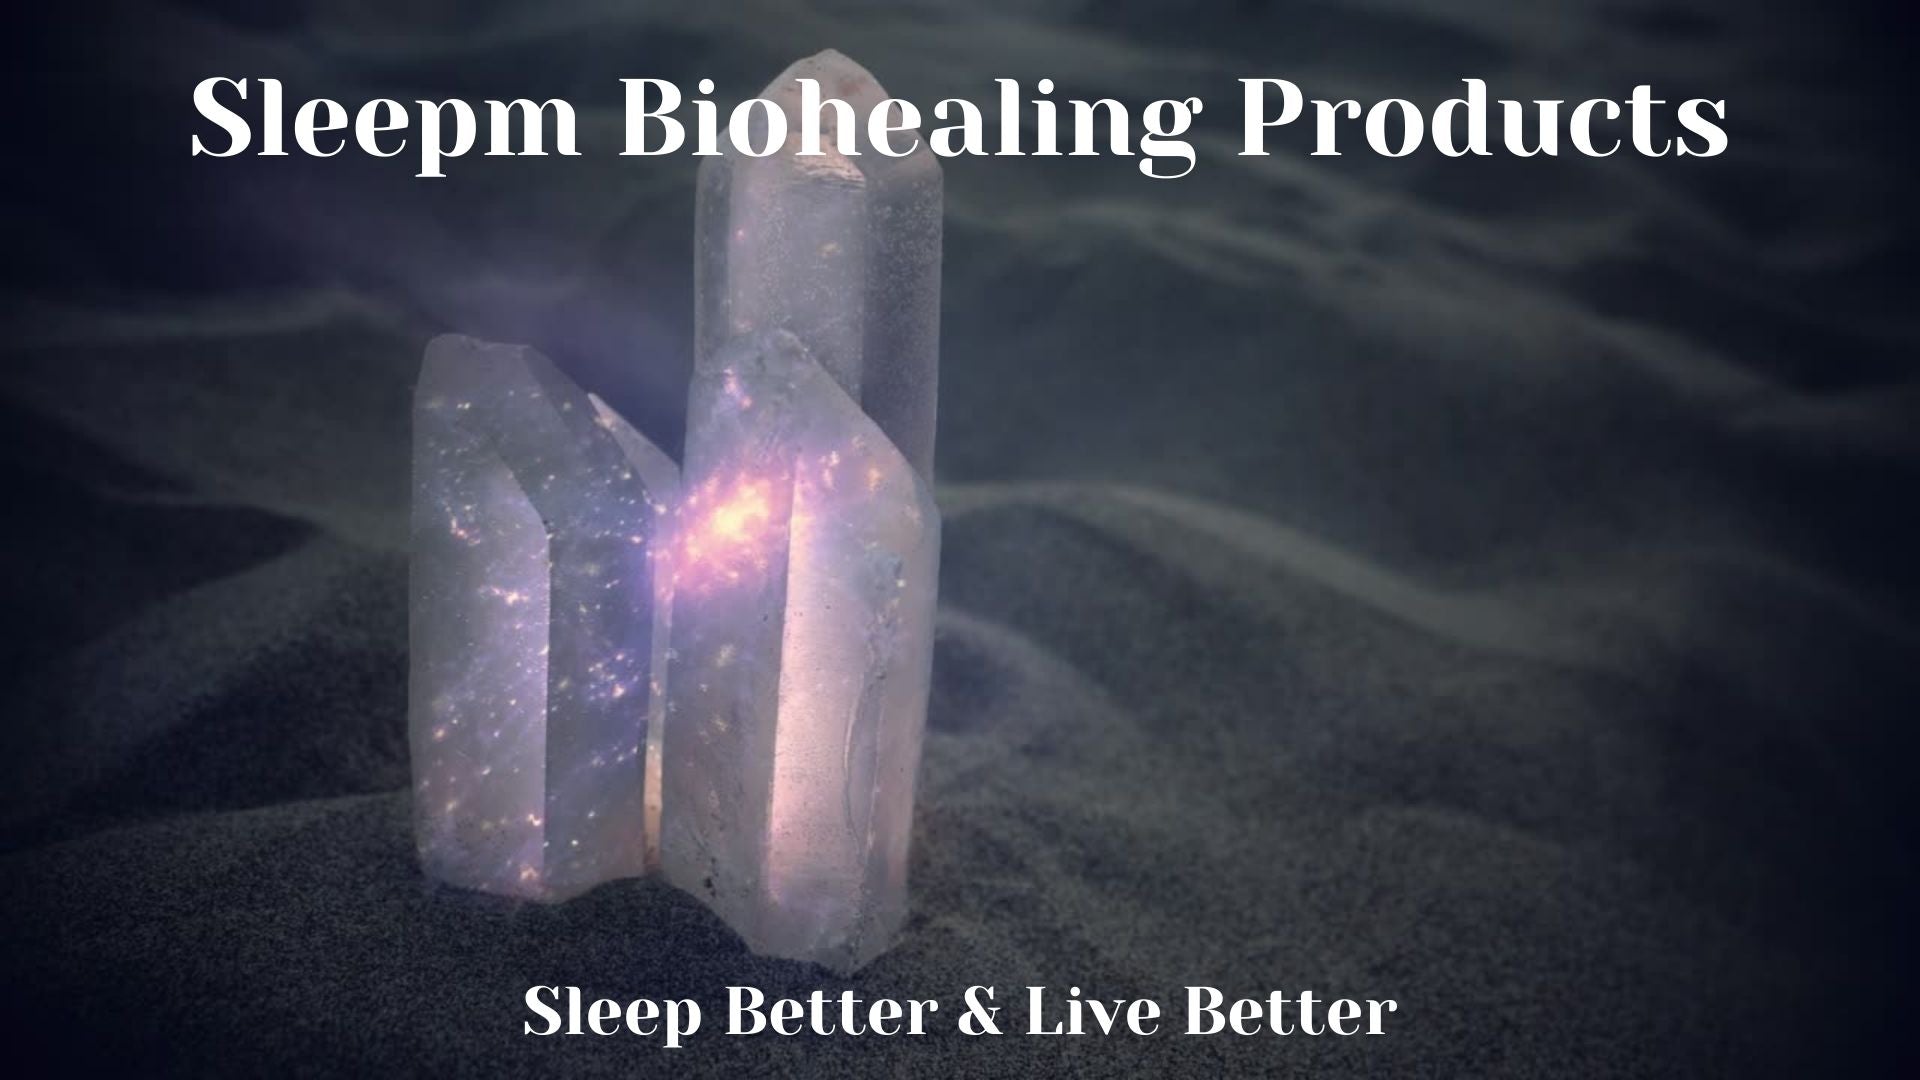 Load video: sleep health sleepm products customer review video